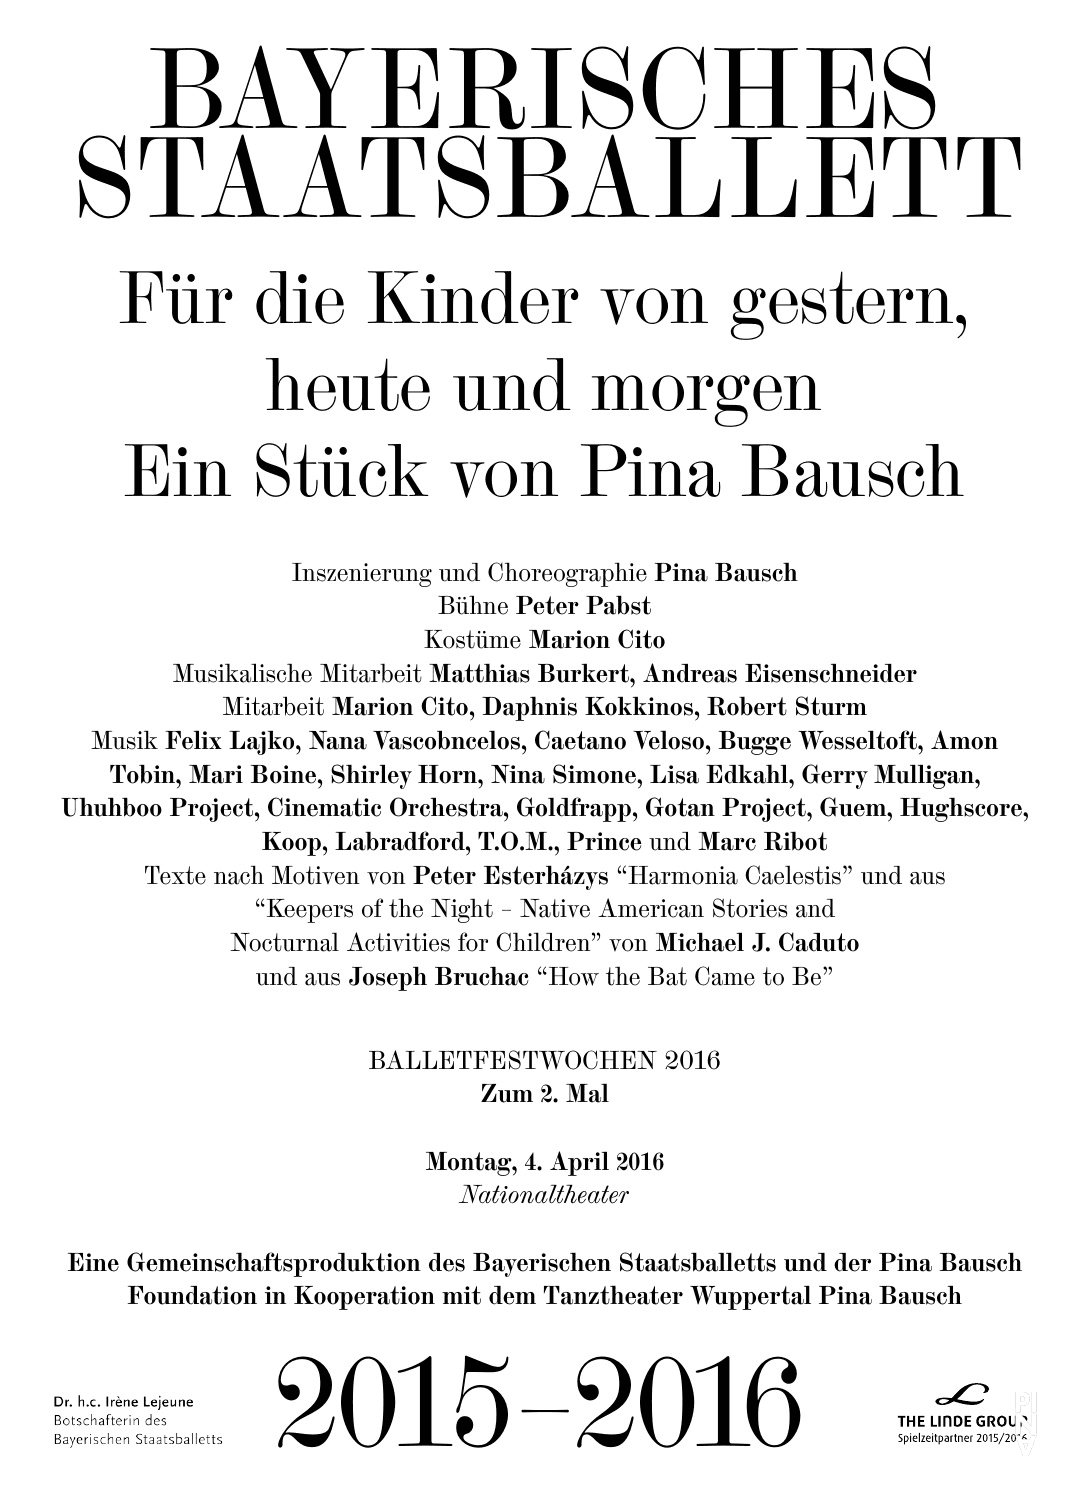 Programme pour « Pour les enfants d´hier, d´aujourd´hui et de demain » de Pina Bausch avec Bayerisches Staatsballett à Munich, 4 avril 2016